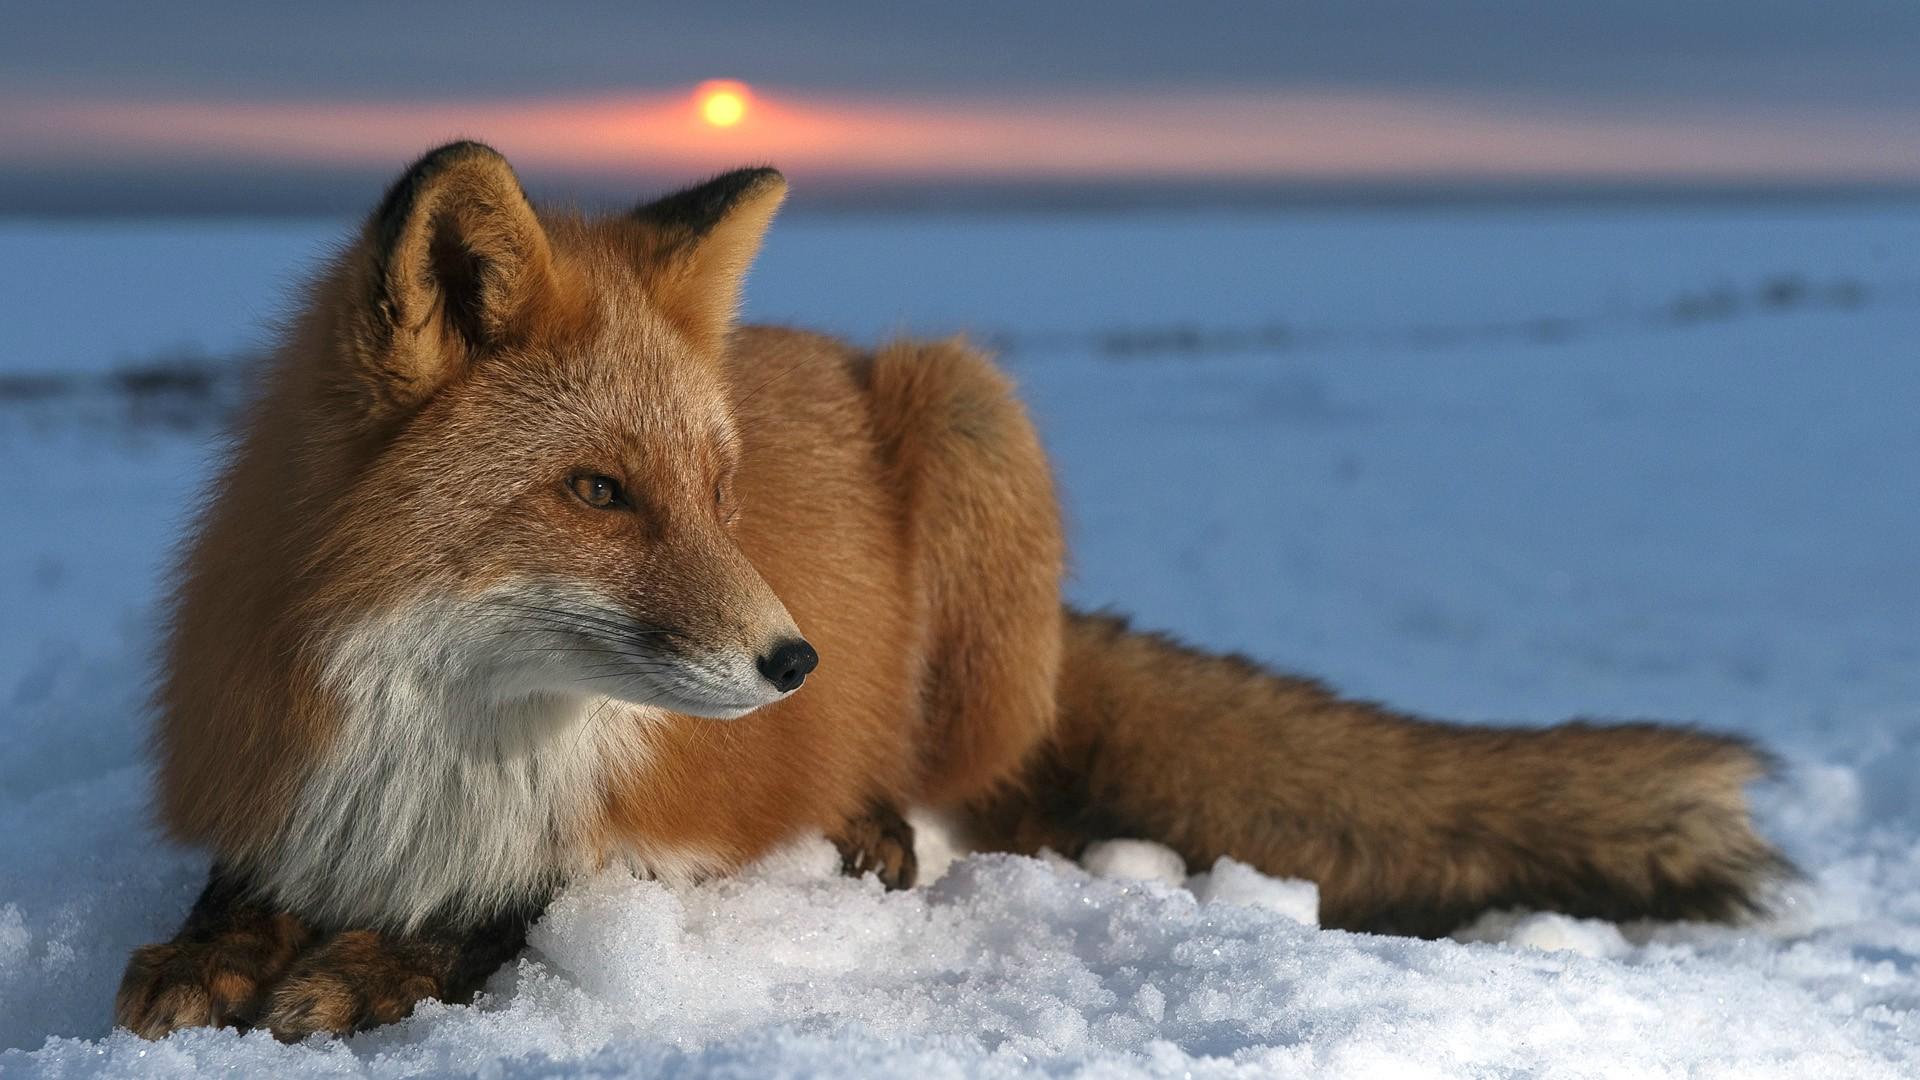 fond d'écran de renard,renard rouge,renard,faune,coyote,loup rouge